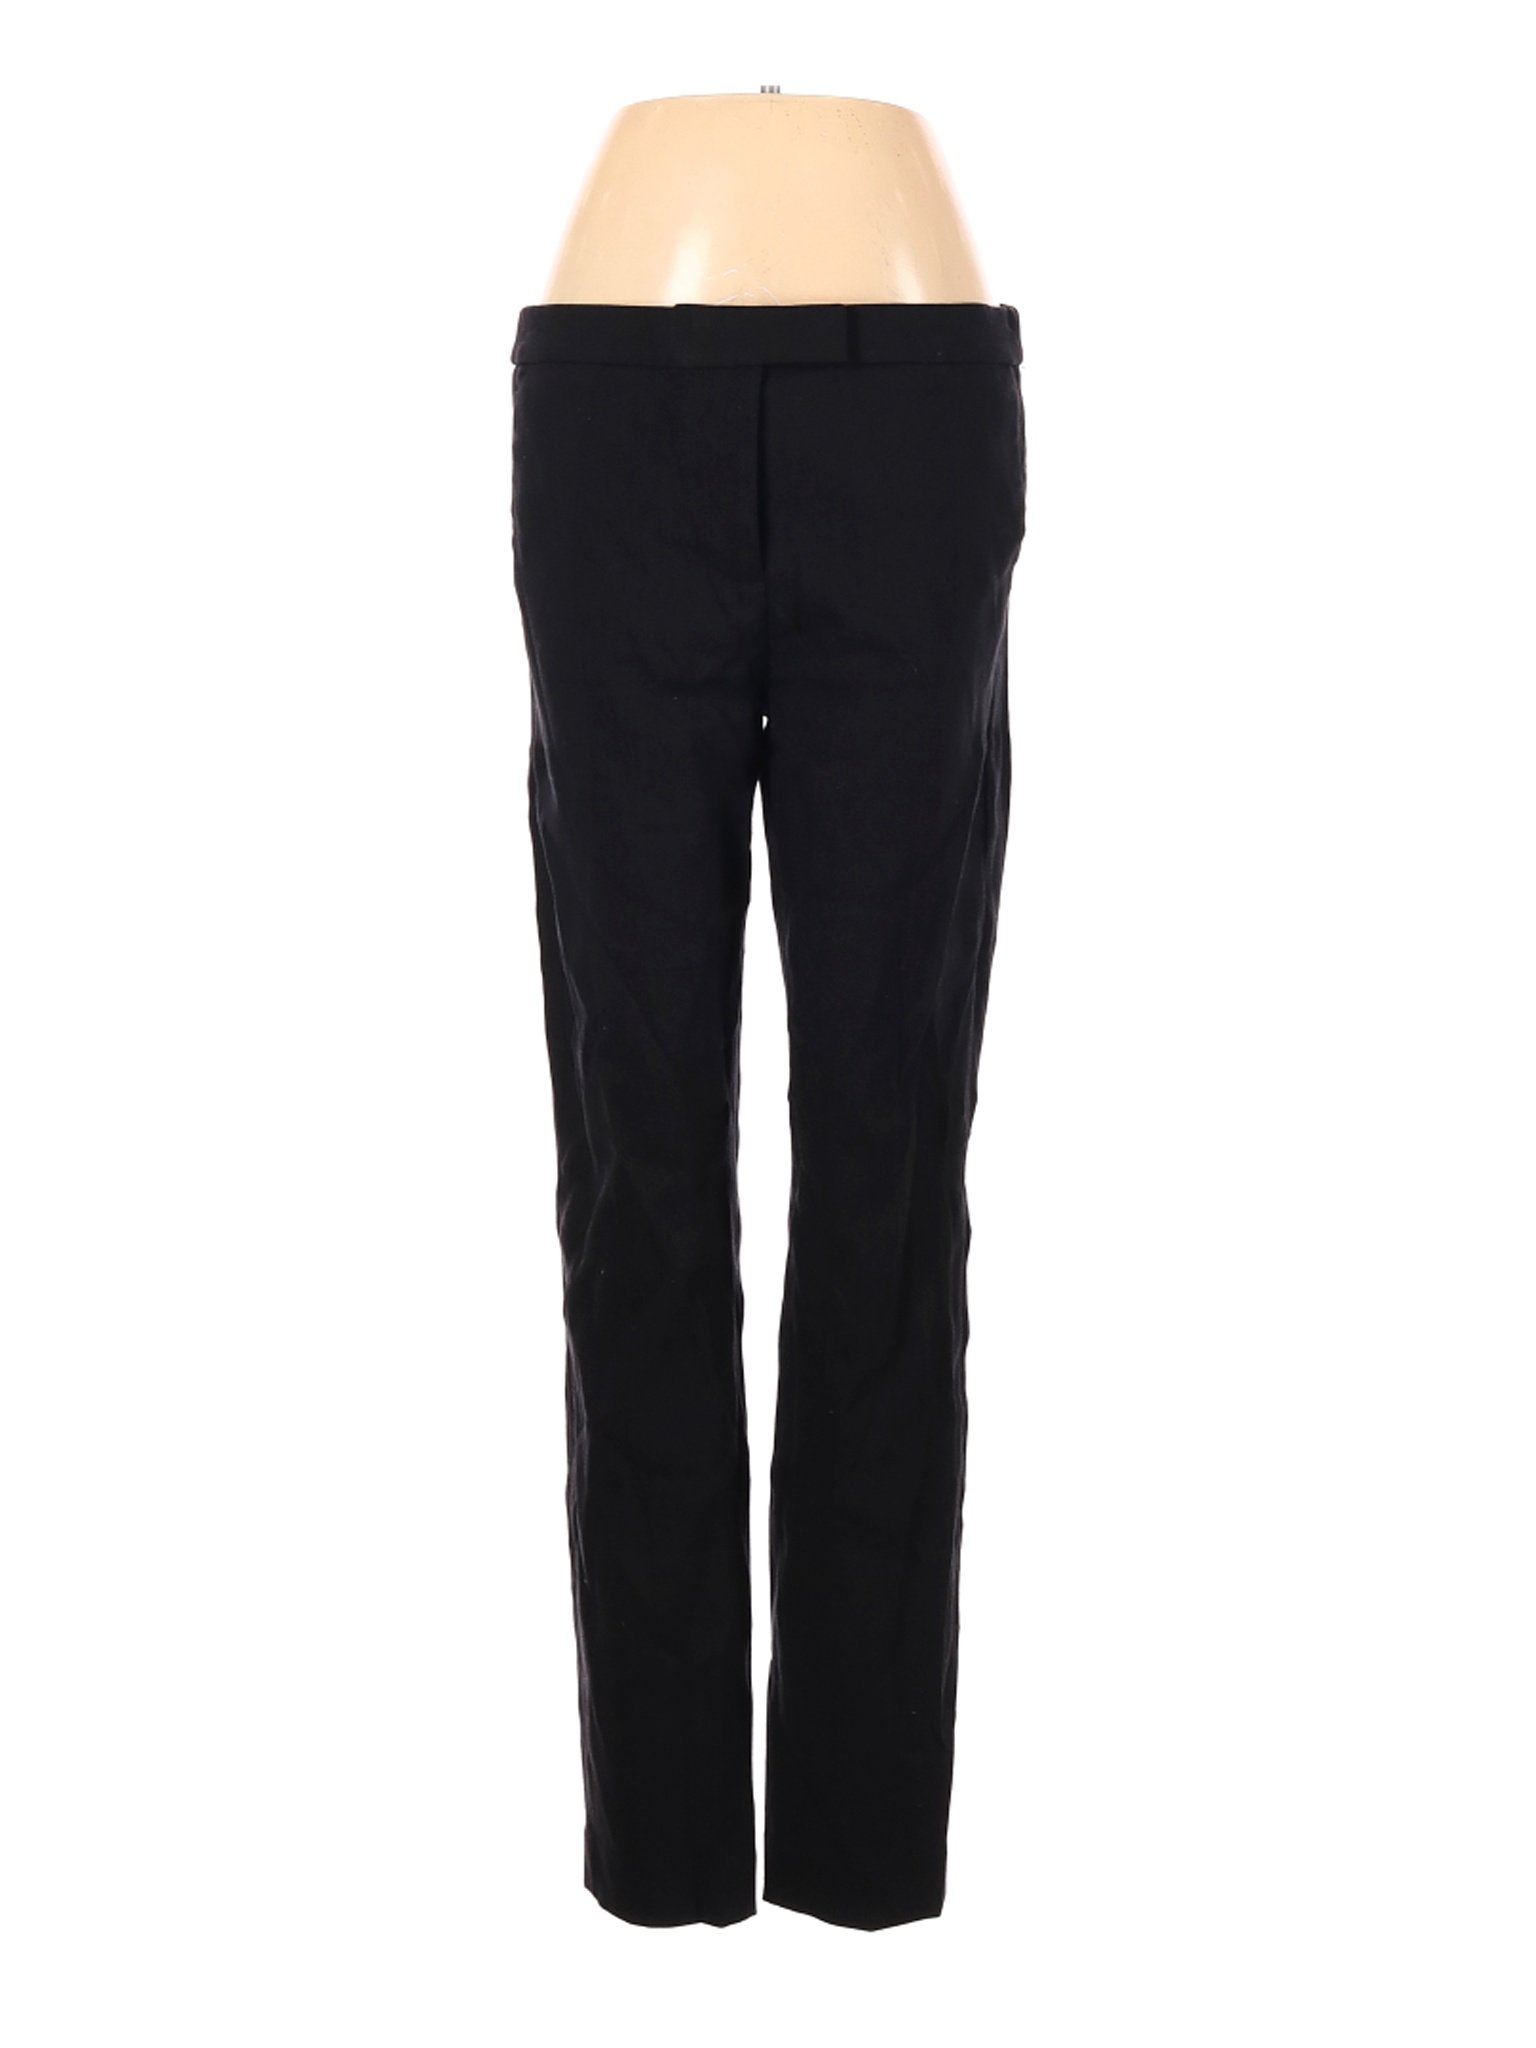 J.Crew Women Black Dress Pants 8 | eBay